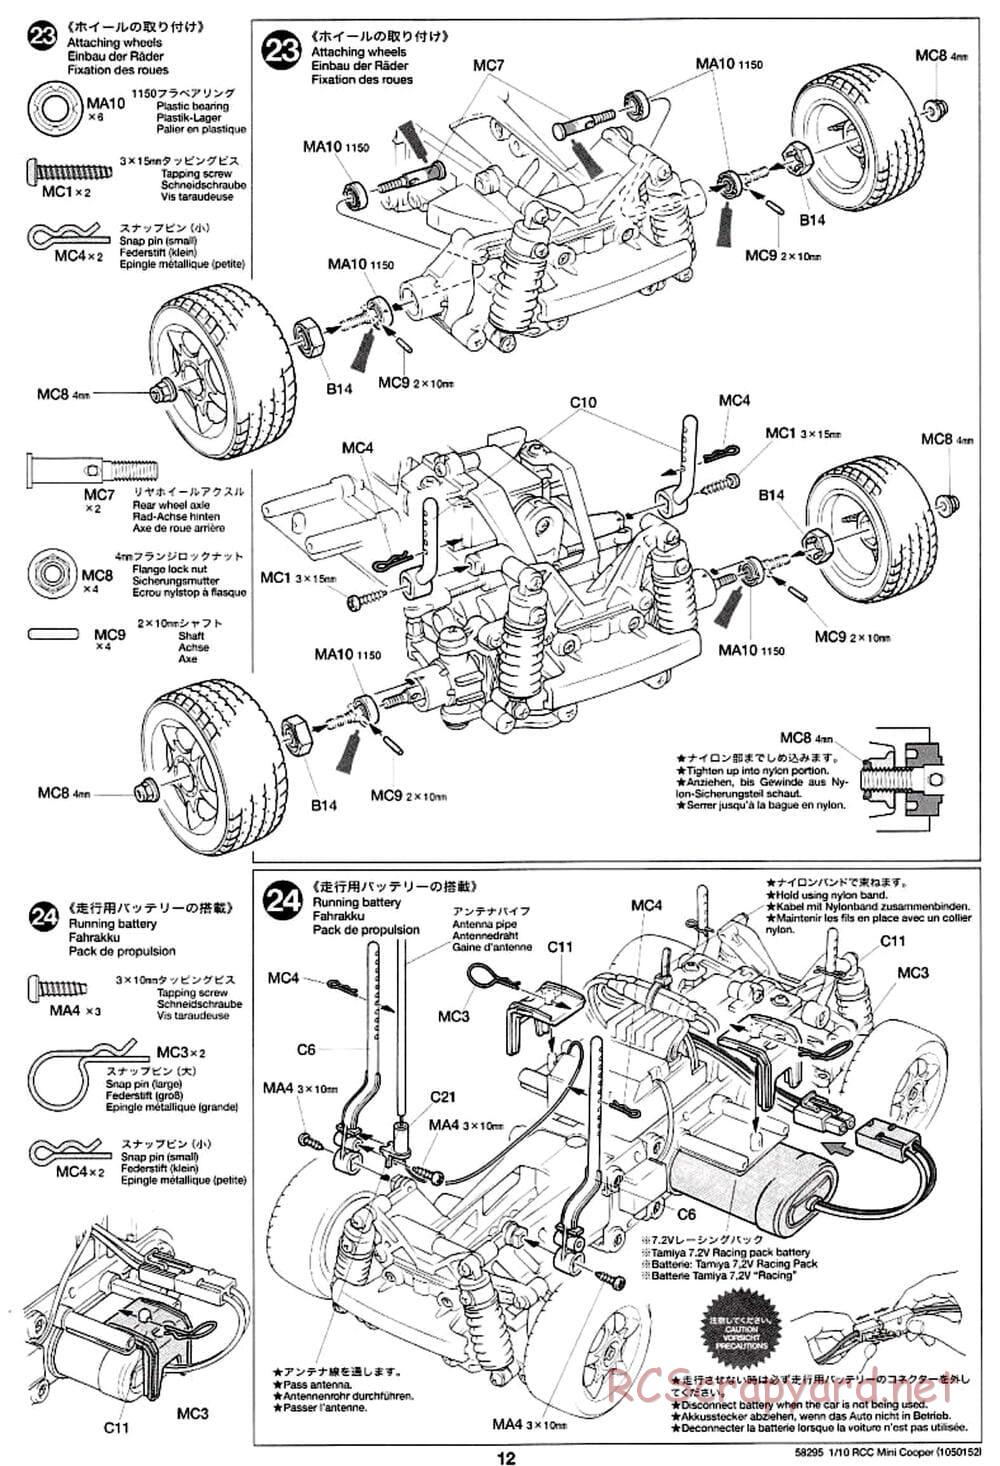 Tamiya - Mini Cooper - M03L Chassis - Manual - Page 11